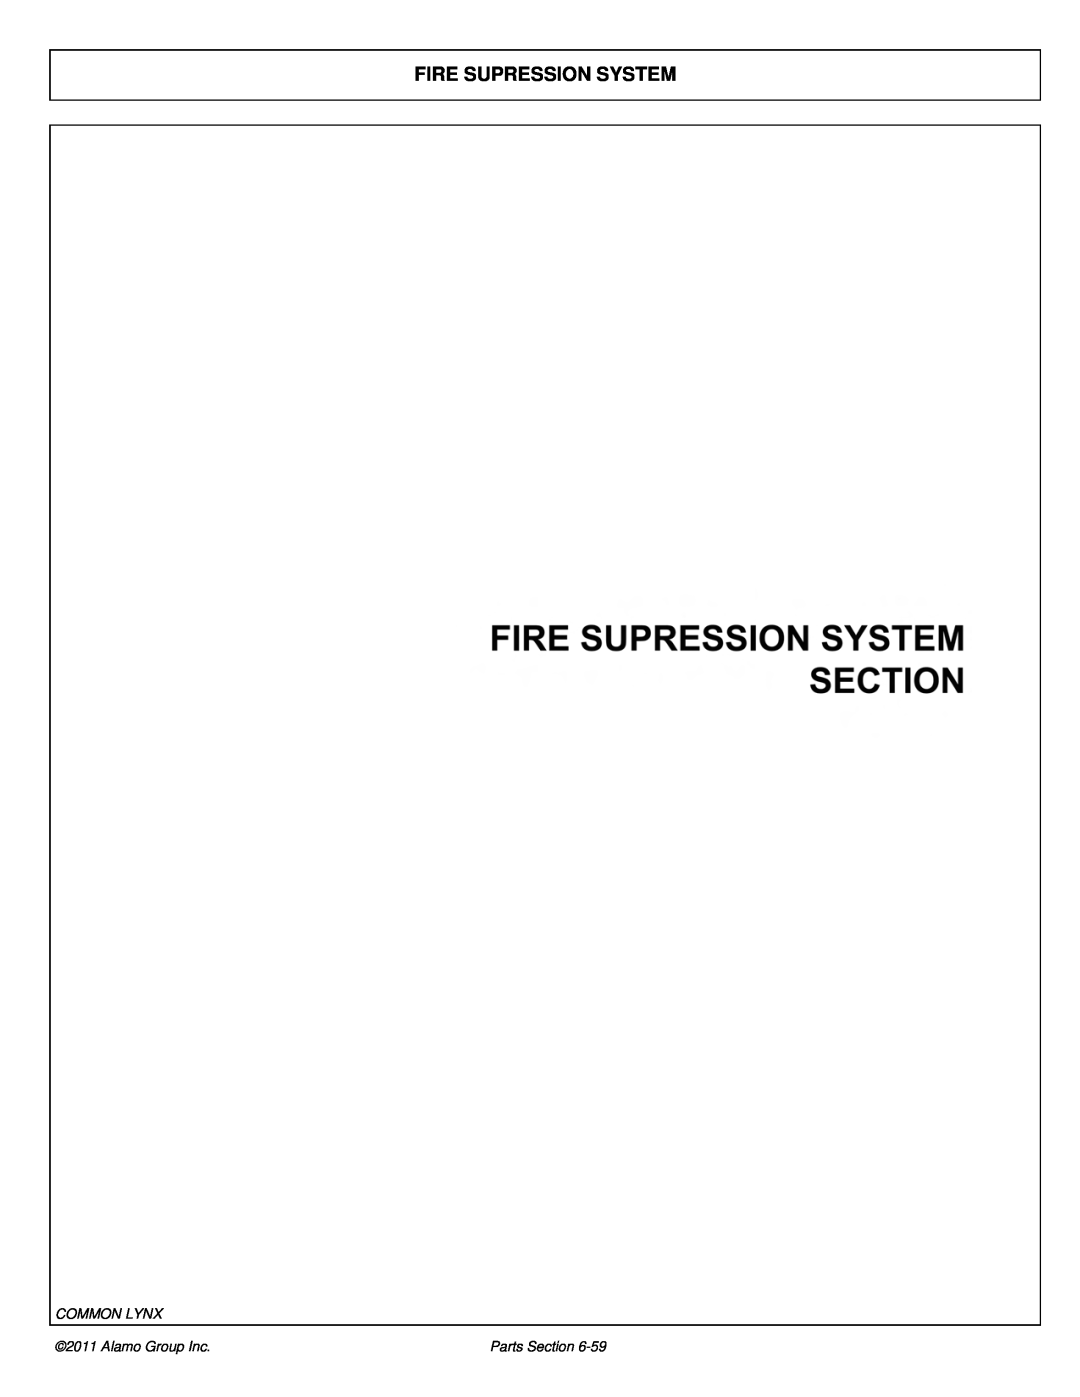 Tiger Products Co., Ltd 5101E, 5083E, 5093E manual Fire Supression System, Common Lynx, Alamo Group Inc, Parts Section 